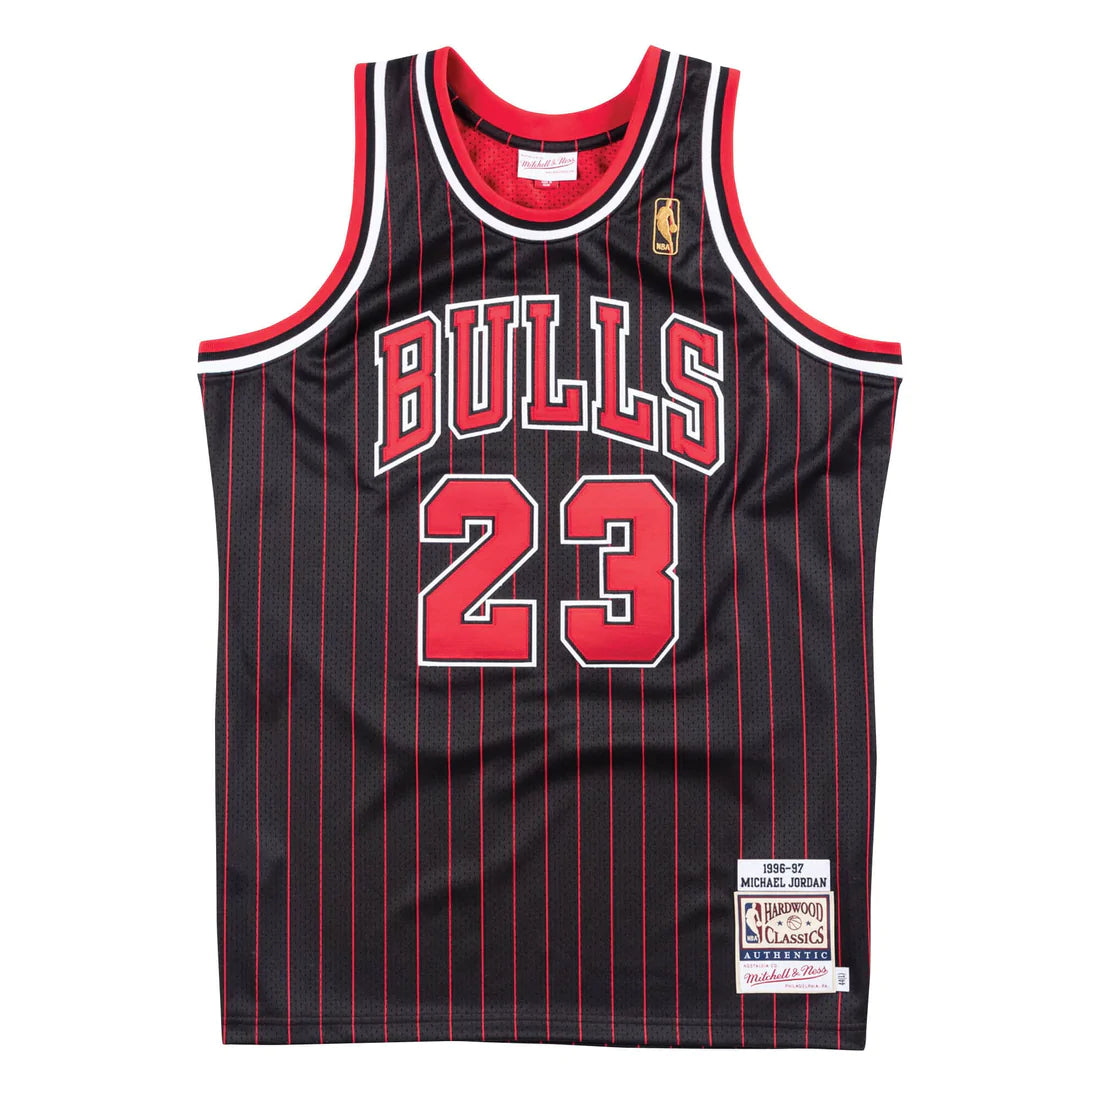 Mitchell & Ness Authentic Michael Jordan '96 Alternate Pinstripe Chicago Bulls Jersey